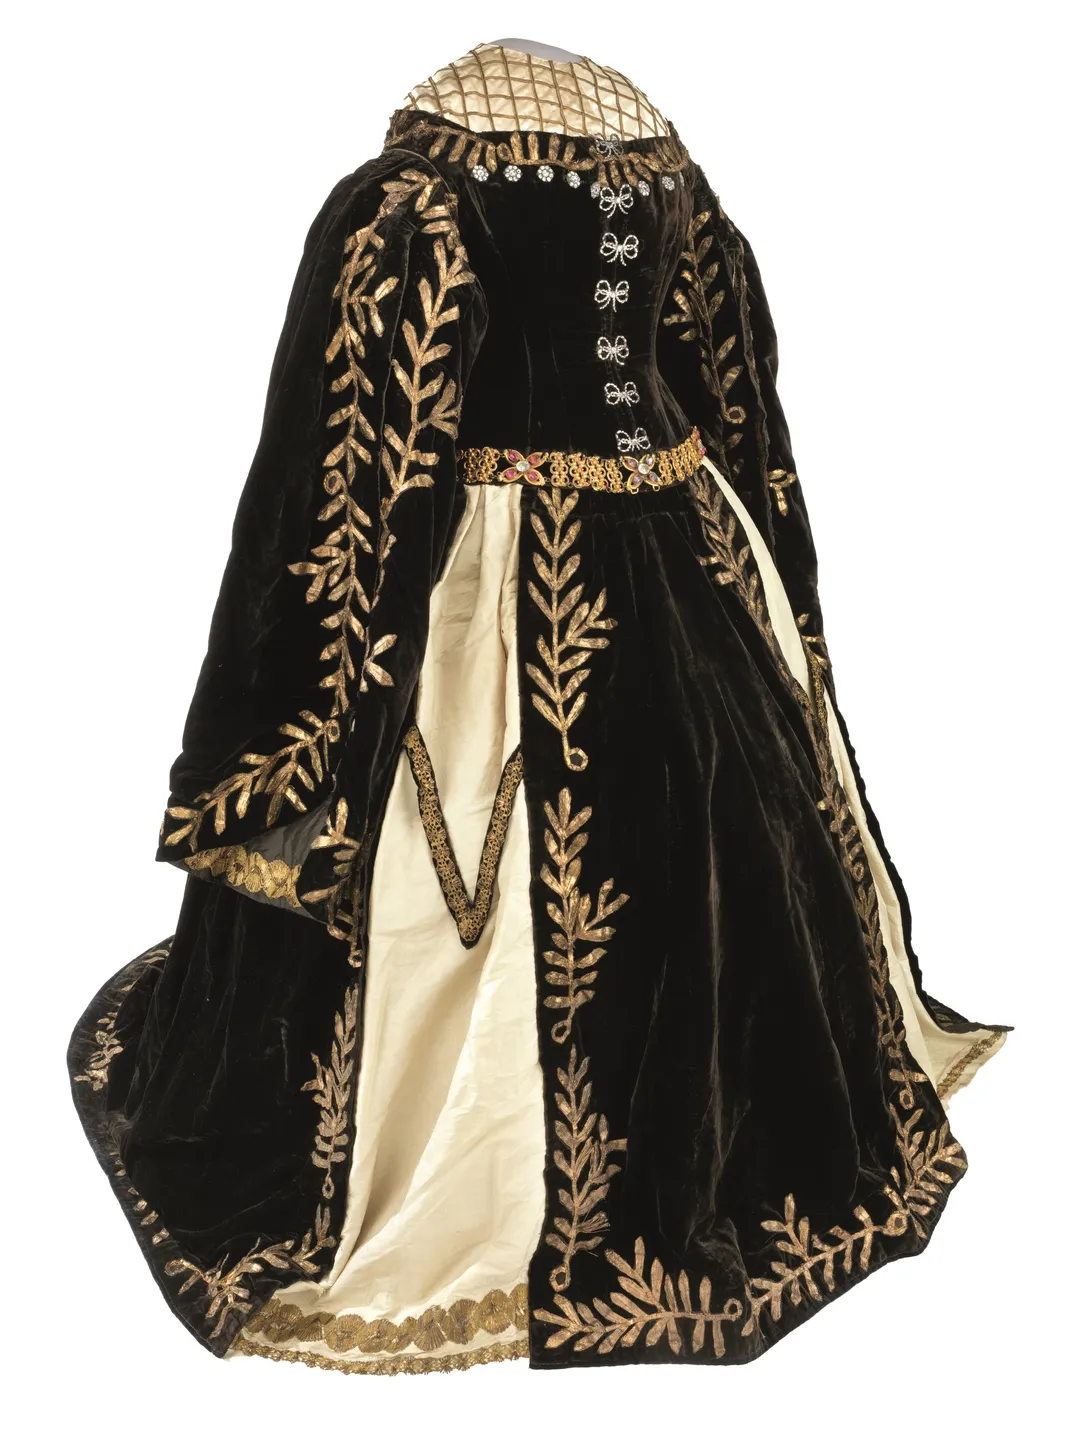 Costume for Katharine of Aragon